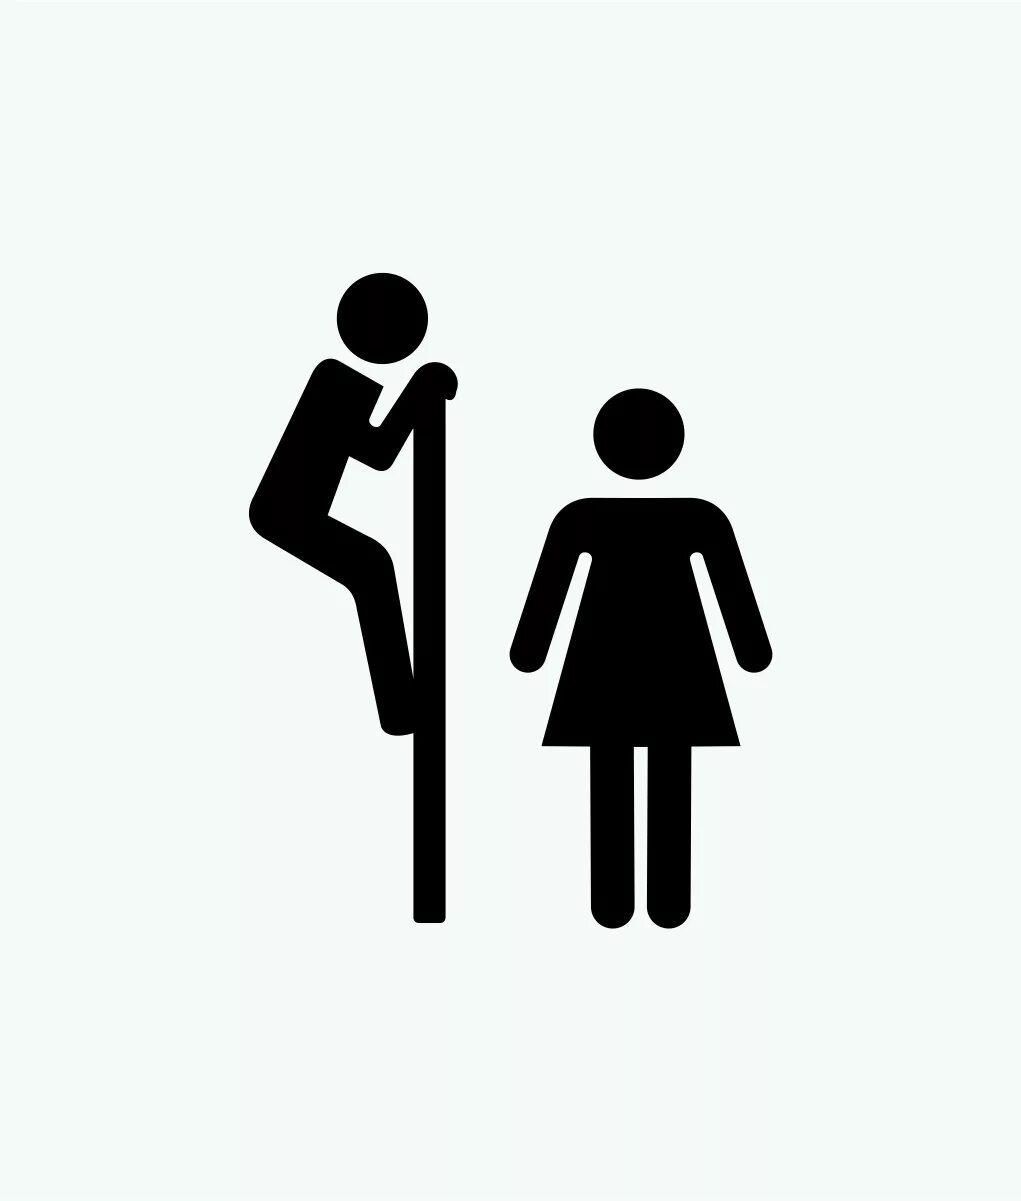 0 wife. Человечки на дверях туалета. Символы м и ж. Обозначение туалета мужского и женского. Знак мж.